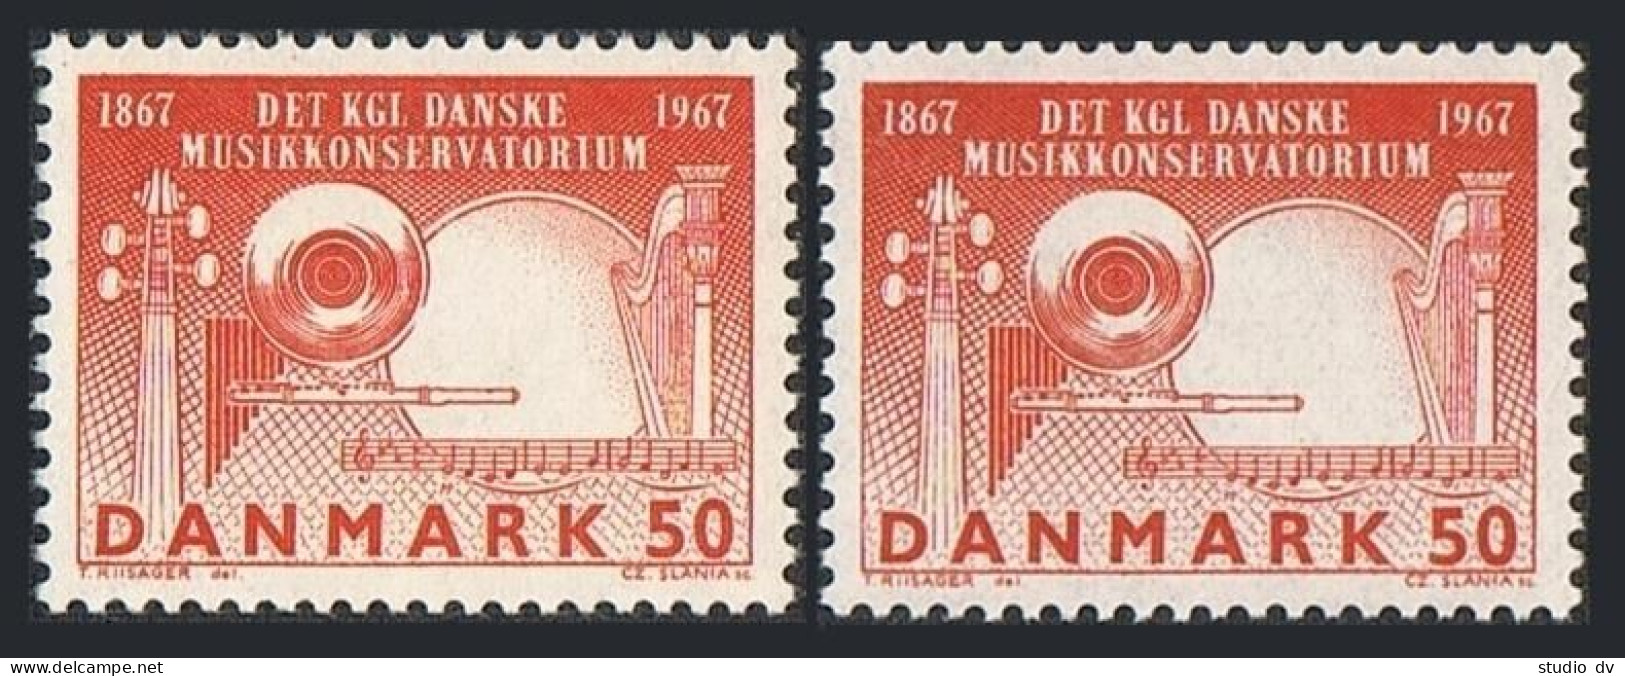 Denmark 430 Two Var, MNH. Michel 449x-449y. Royal Danish Academy Of Music, 1967. - Nuevos